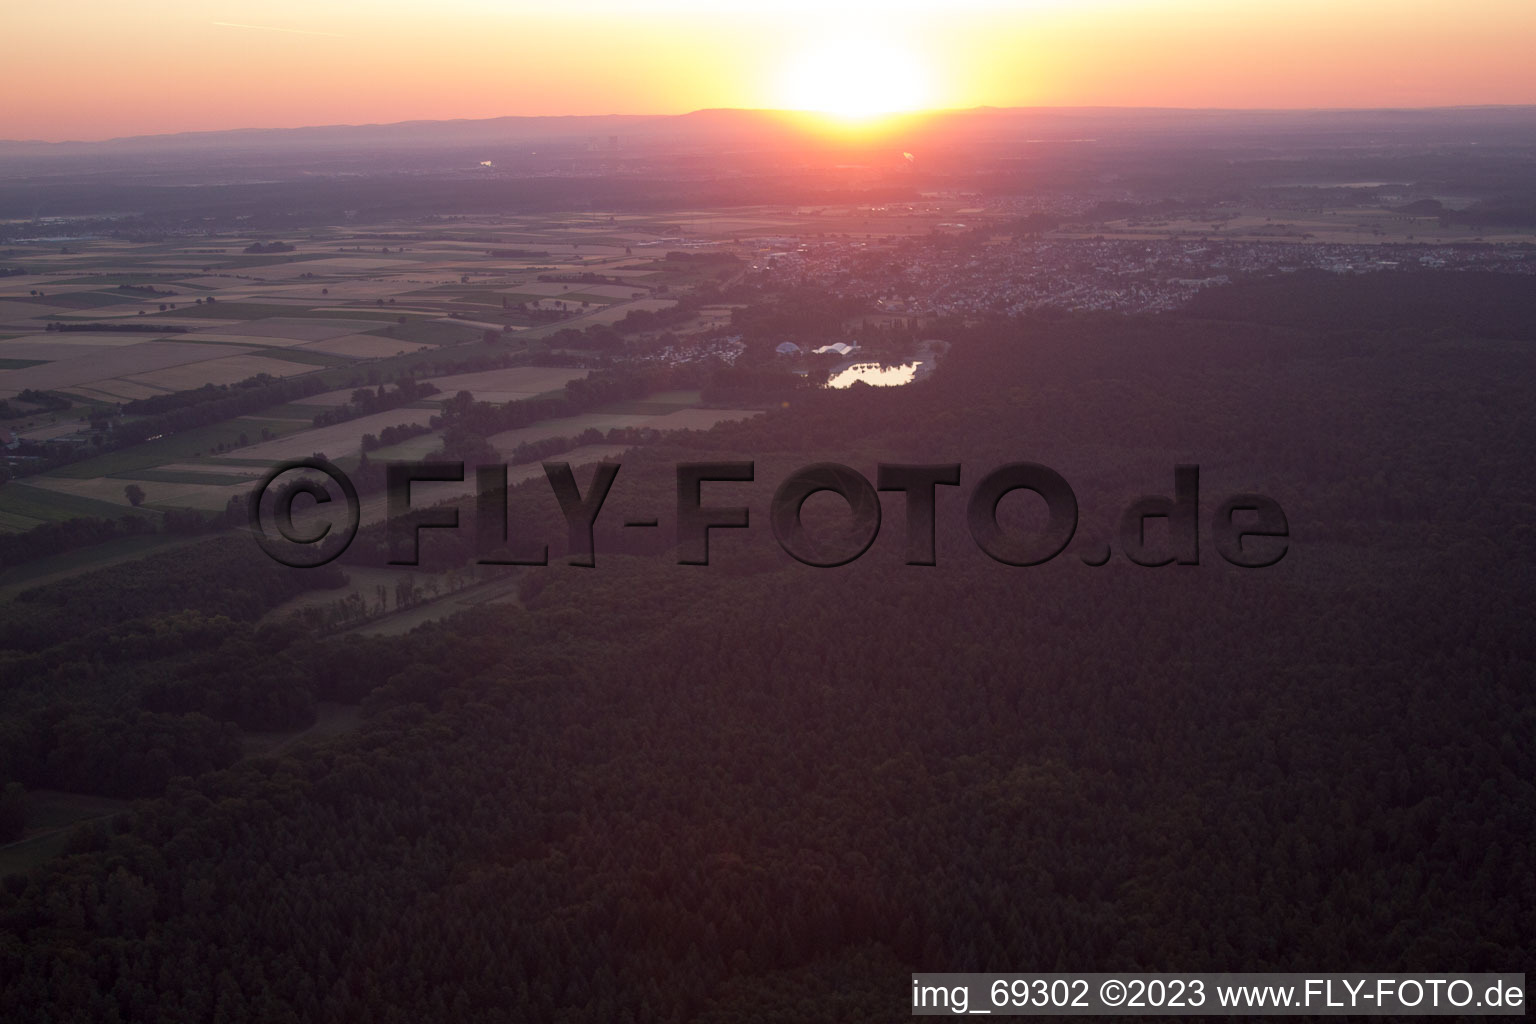 Herxheimweyher in the state Rhineland-Palatinate, Germany from a drone